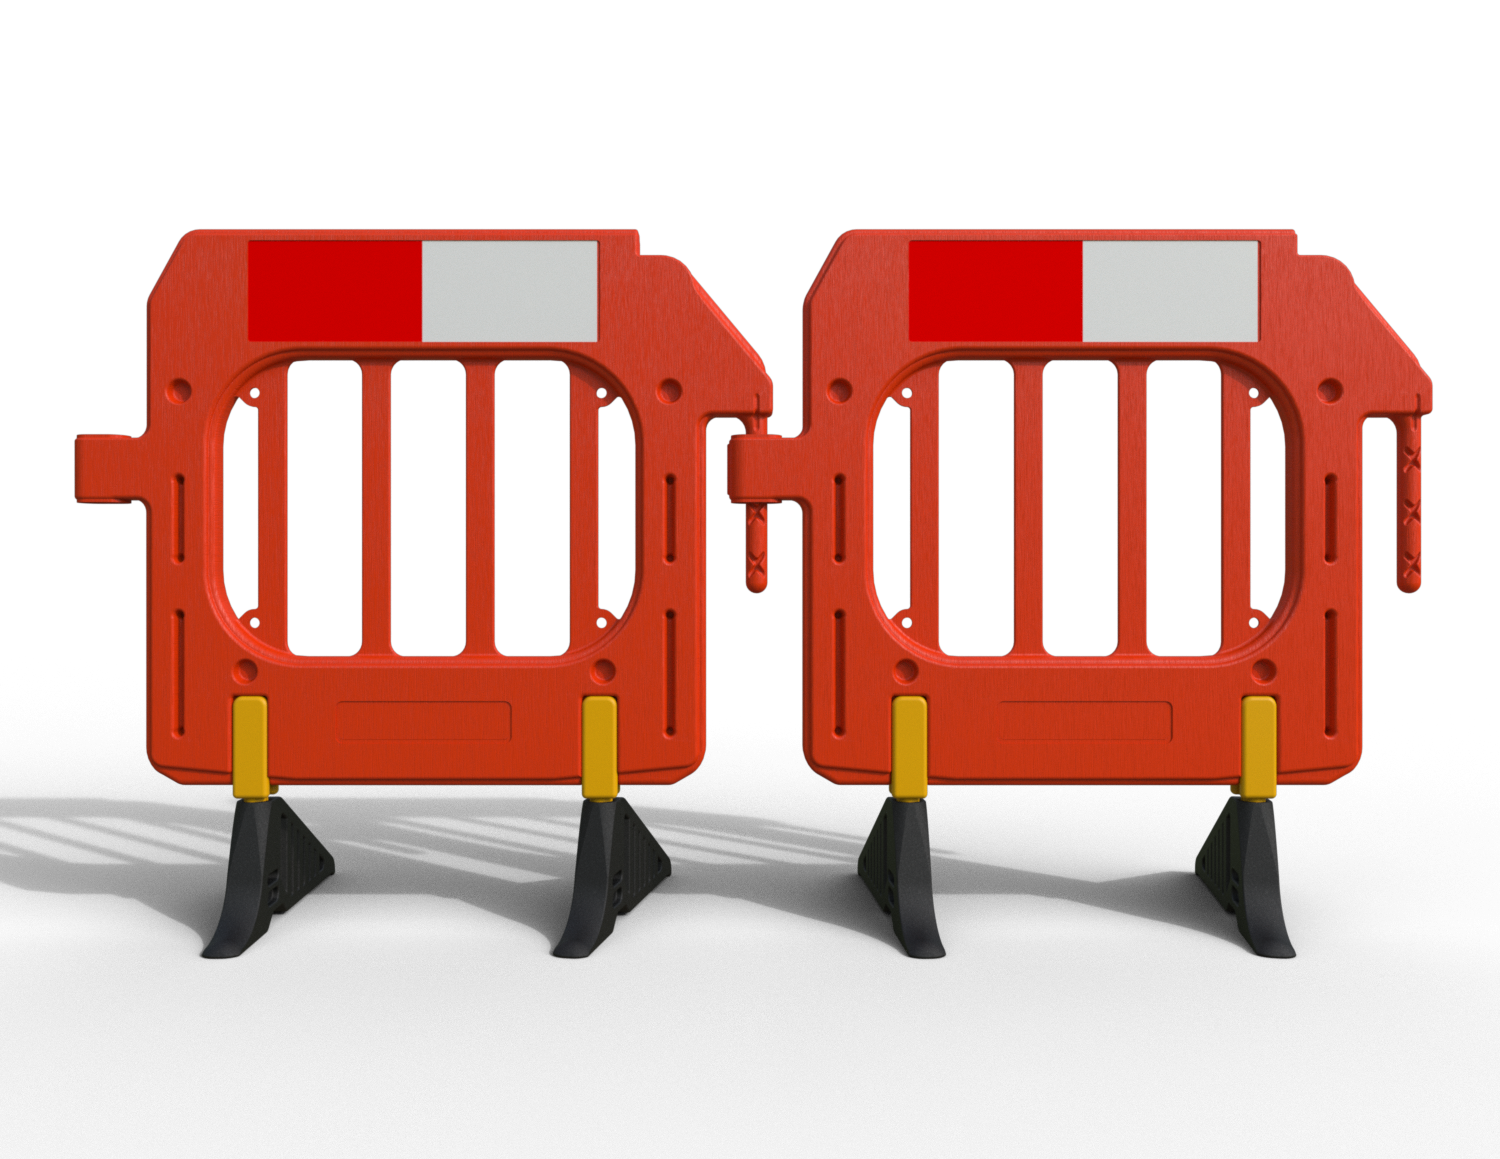 Construction barrier 'Gatebarrier' small - orange - 1000 x 1000 mm